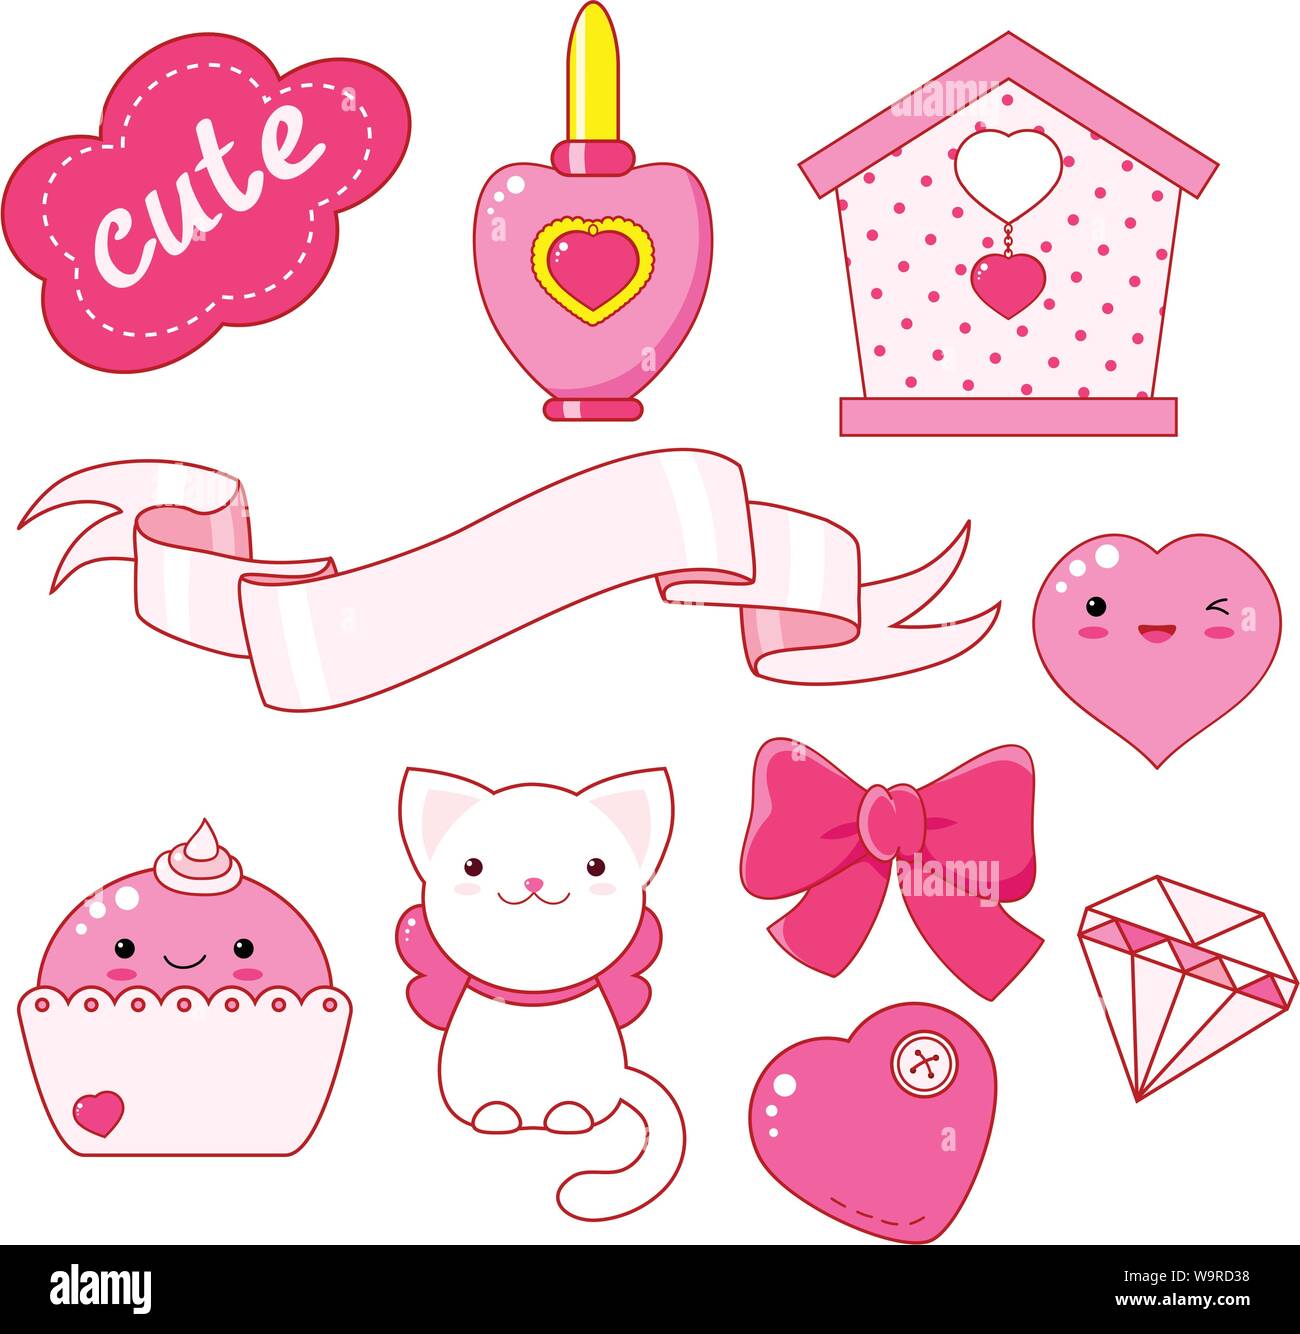 Cute little princess sticker set - cat, heart, nail polish, cupcake, bow, diamond, small house, ribbon, inscription so cute. In pink color. EPS8 Stock Vector